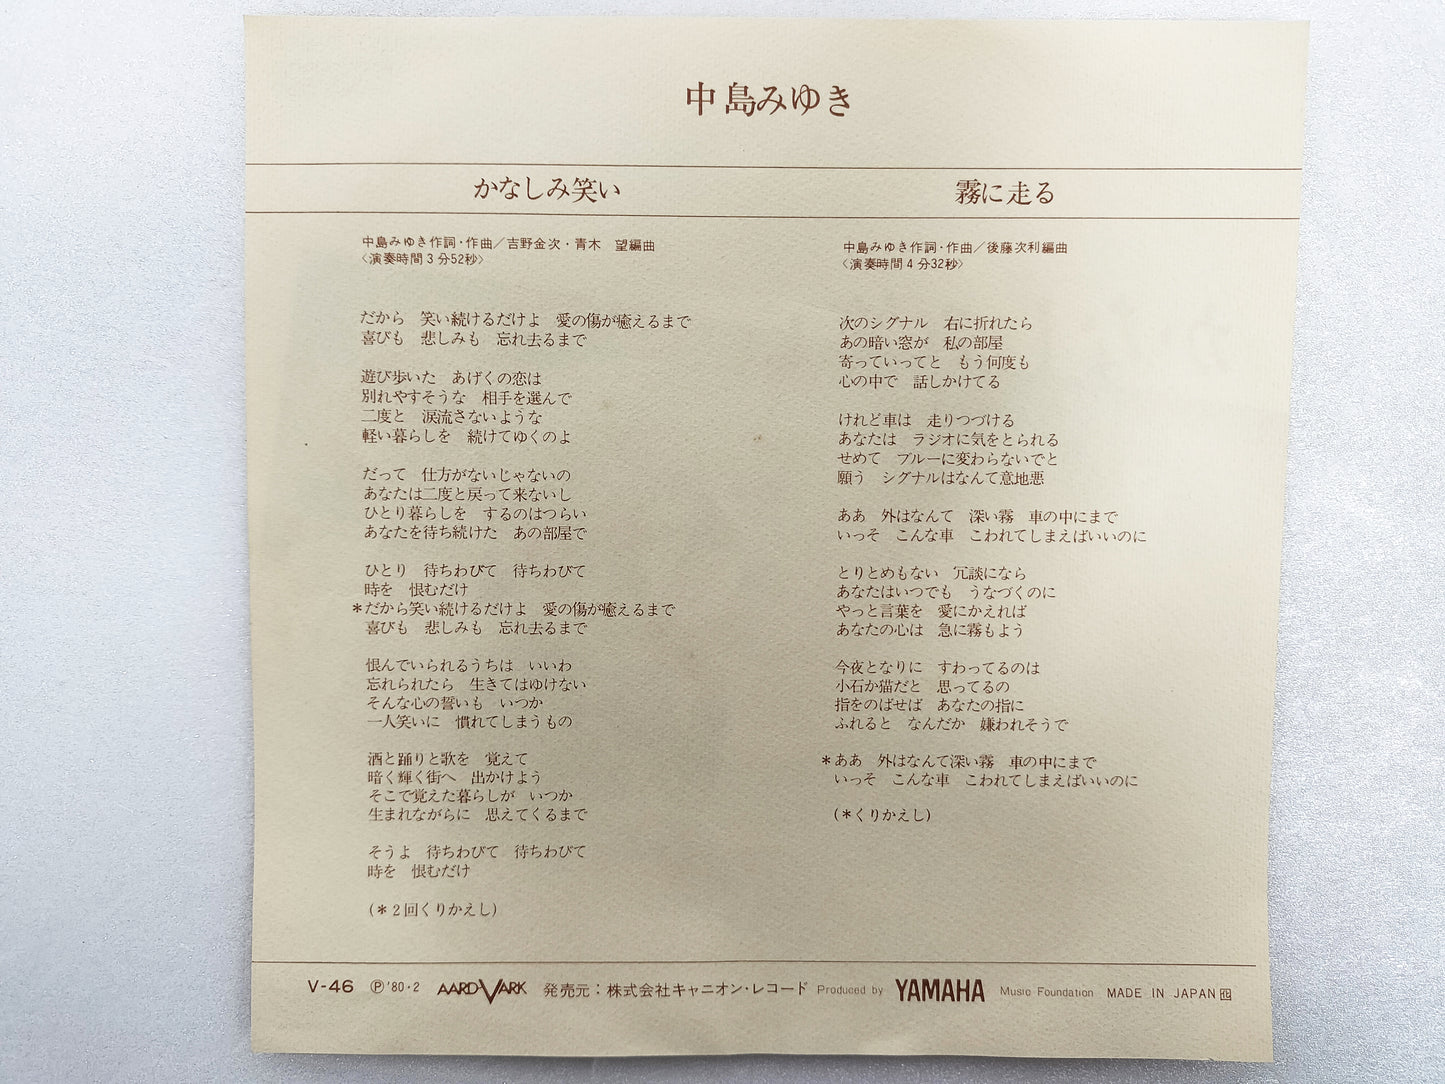 1980 Sorrowful Laughter Miyuki Nakajima B: Running in the Fog Japanese record vintage